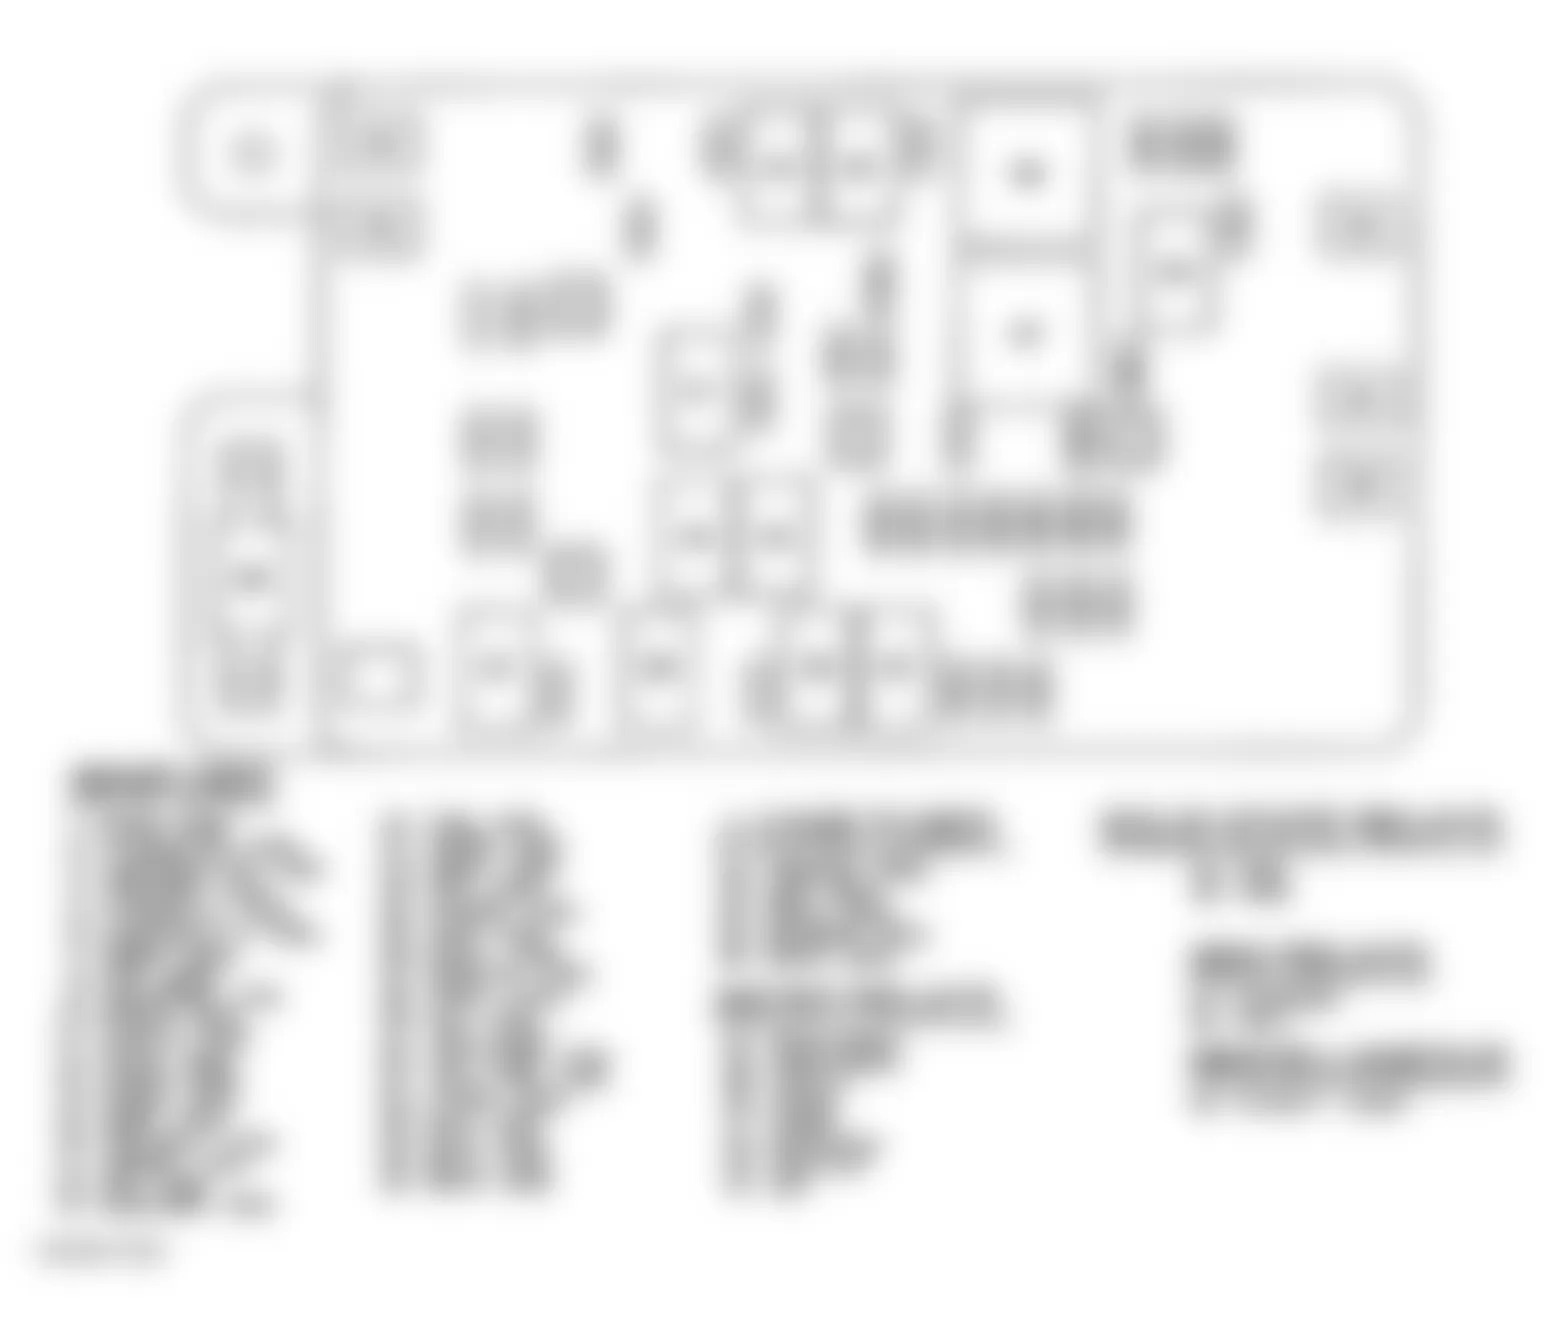 GMC Envoy XL 2003 - Component Locations -  Identifying Underhood Fuse Block Components (5.3L Engine)